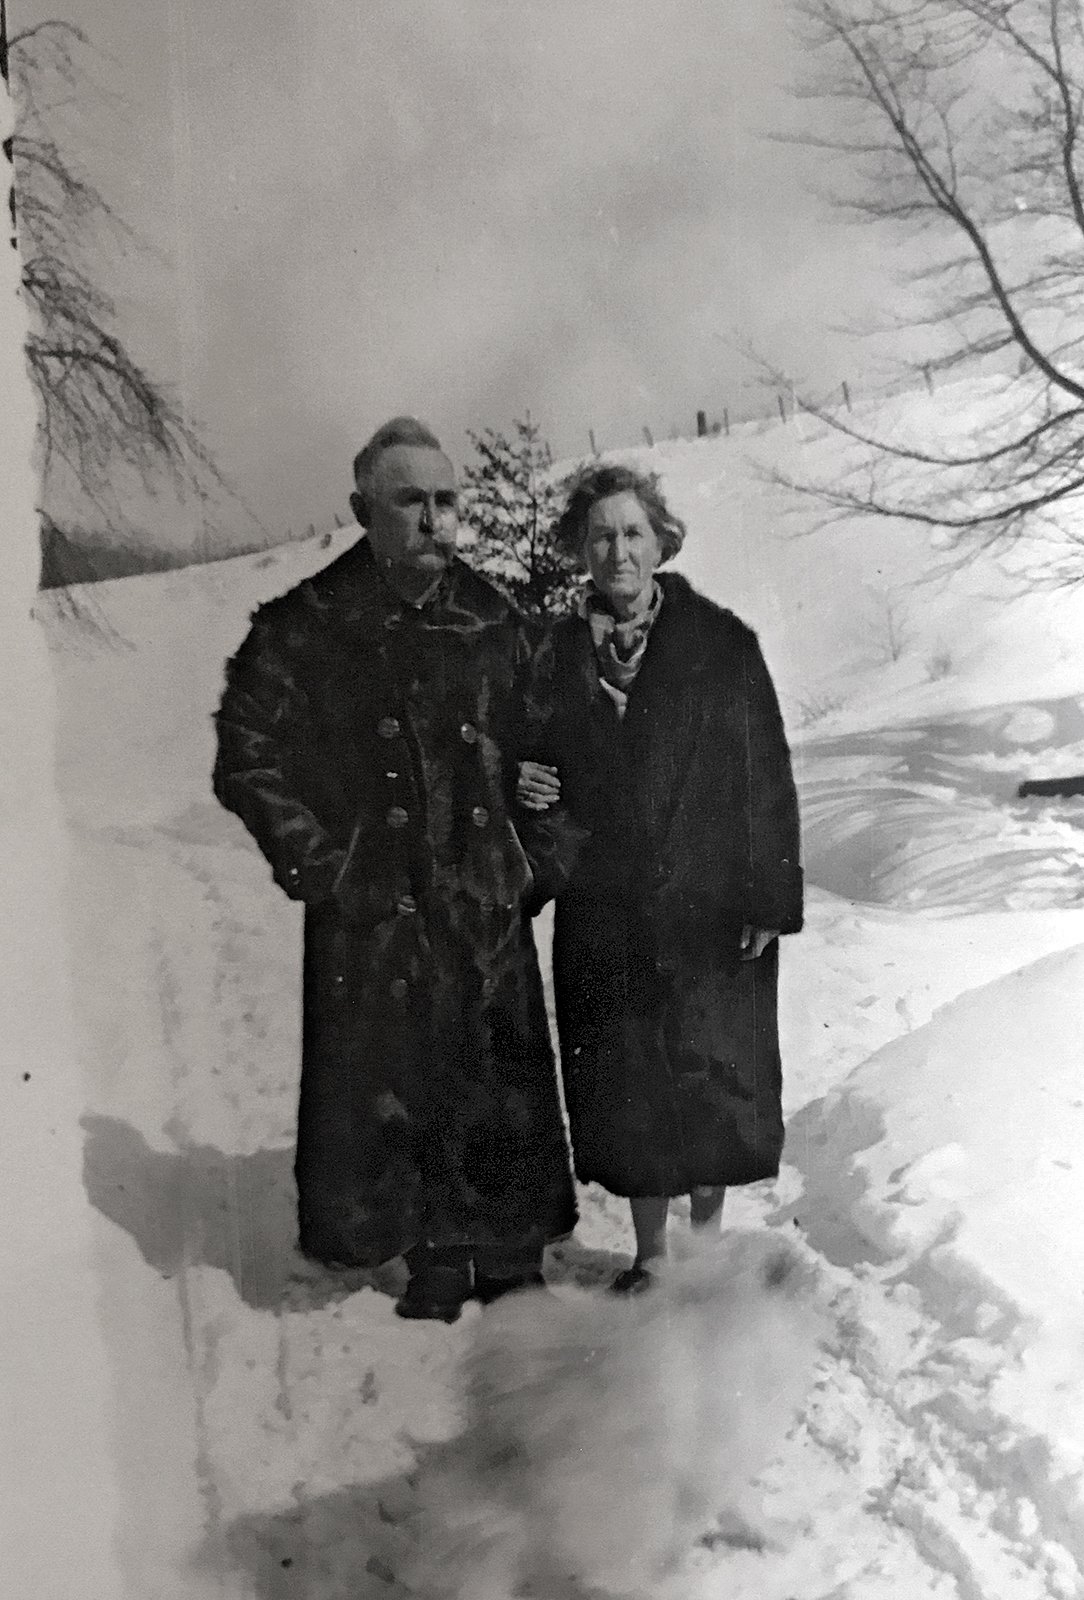 Tressa and husband Frank Yohe walking in the snow on their farm, Pennsylvania, c. 1940s.